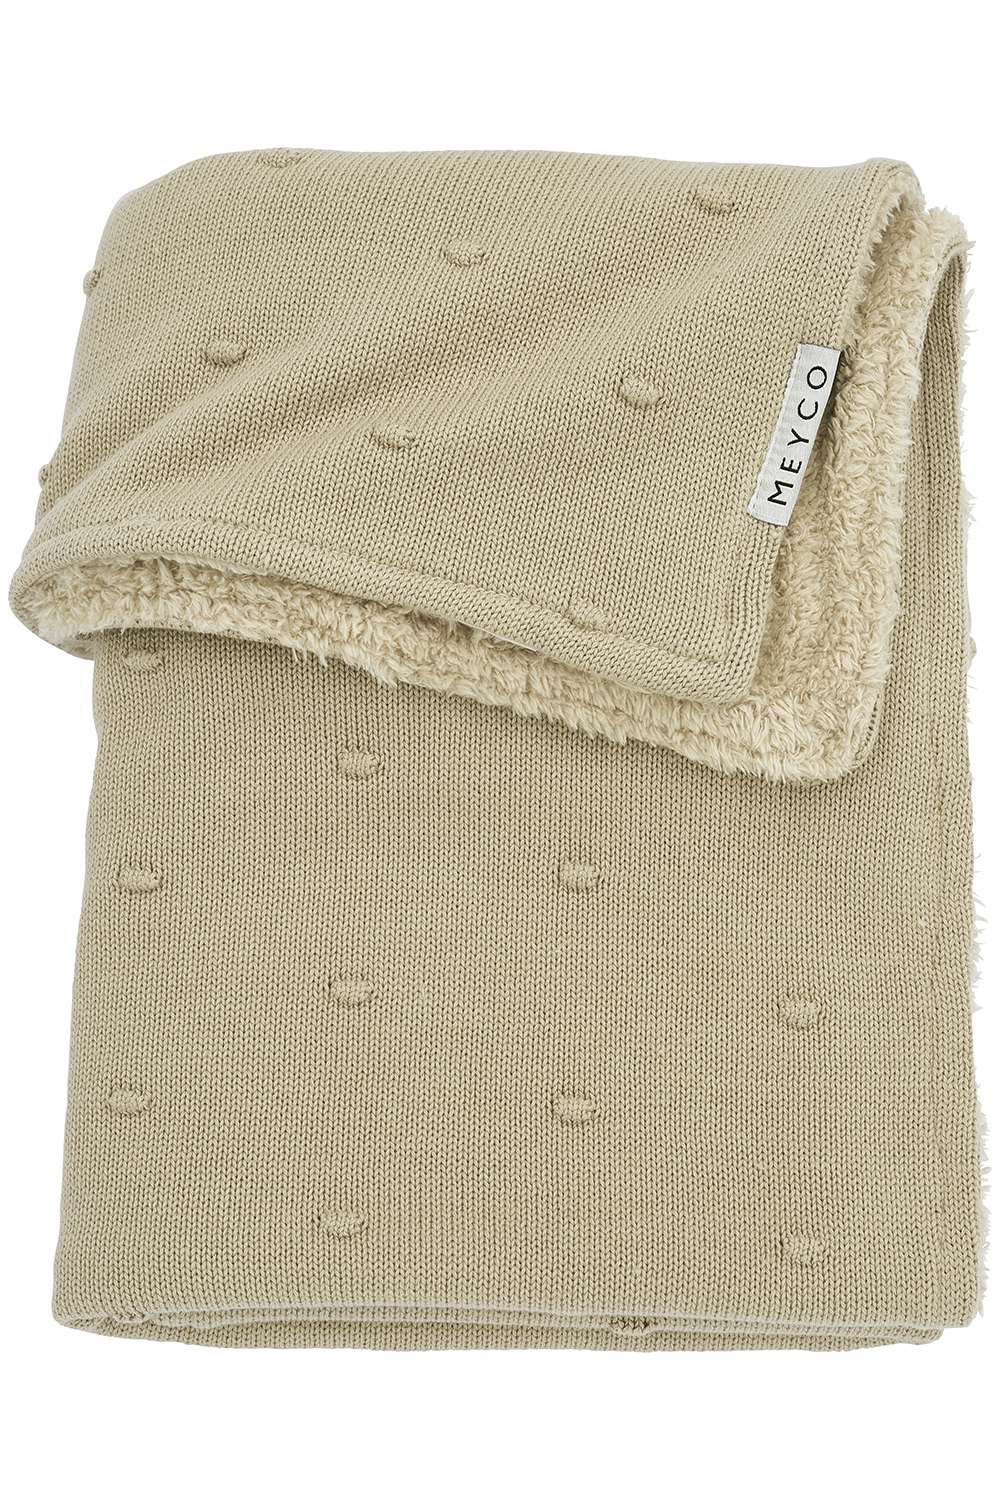 Ledikant deken Mini Knots teddy - sand - 100x150cm